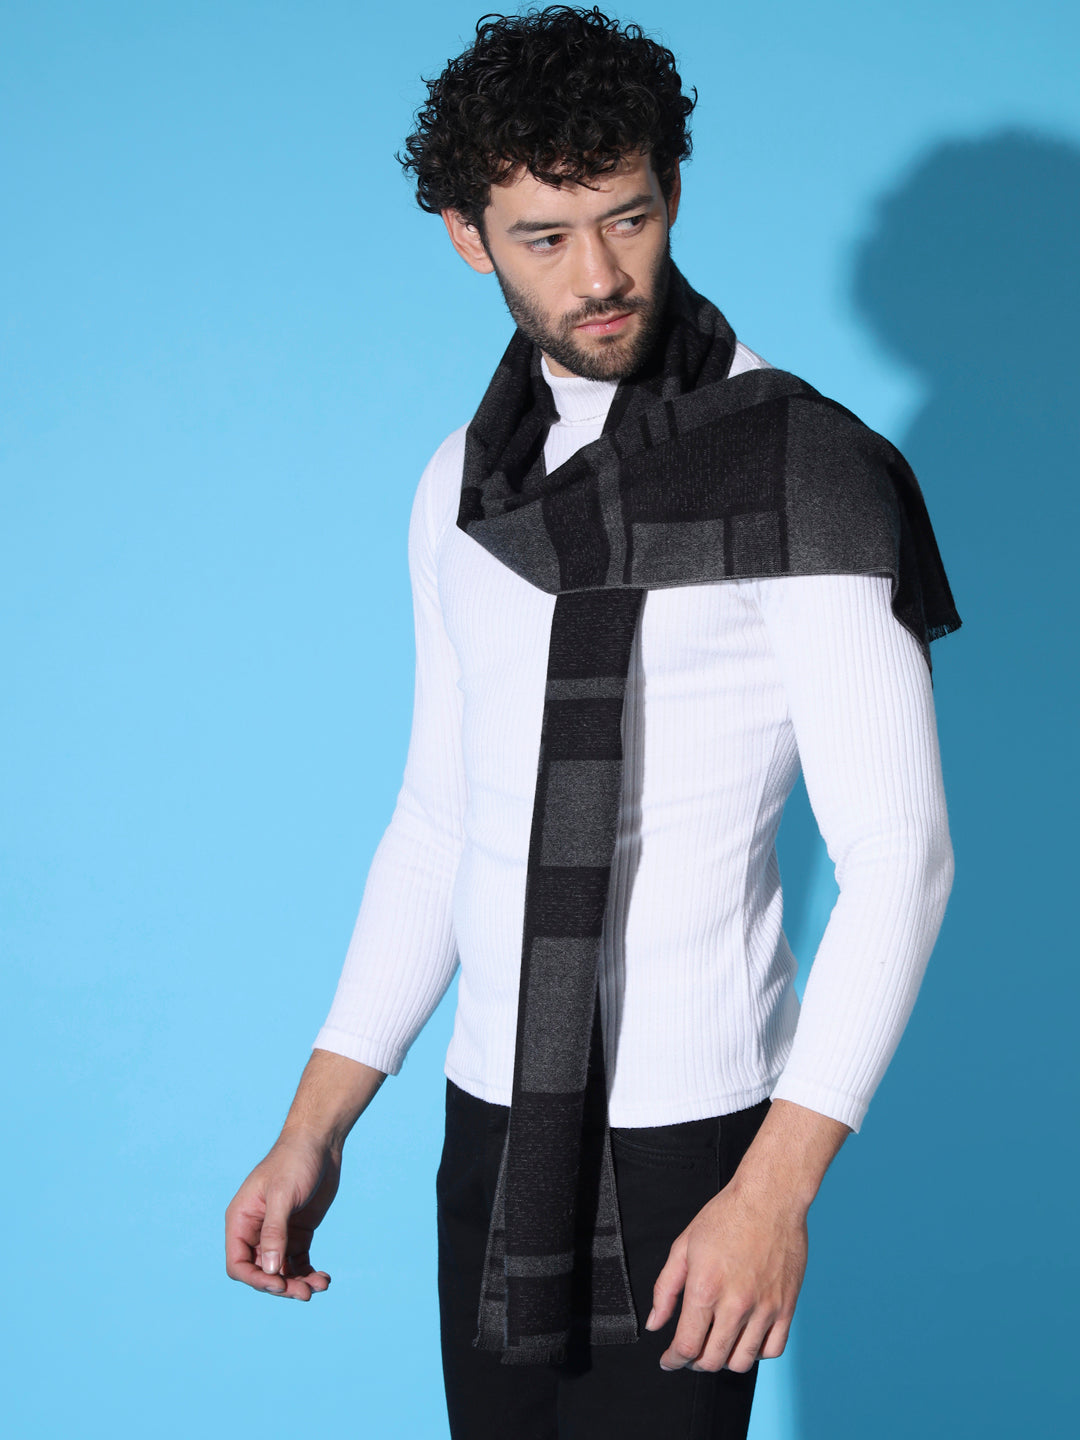 Masculine Checkered Grey and Black Muffler: Stylish Essential